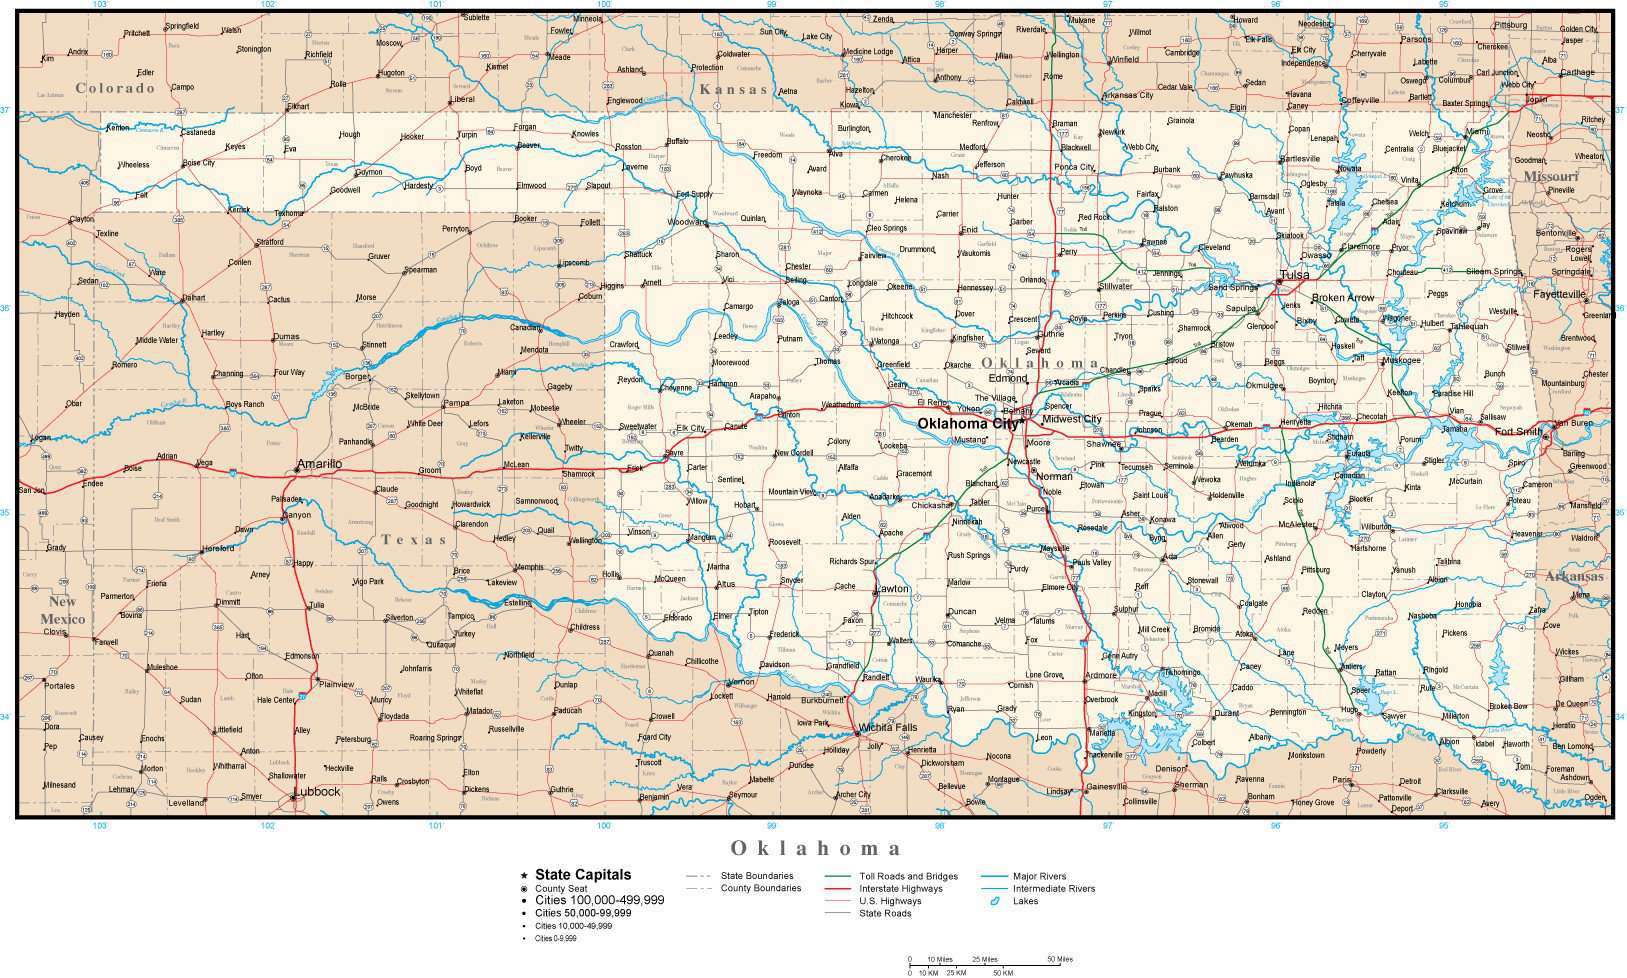 Download Oklahoma map in Adobe Illustrator vector format